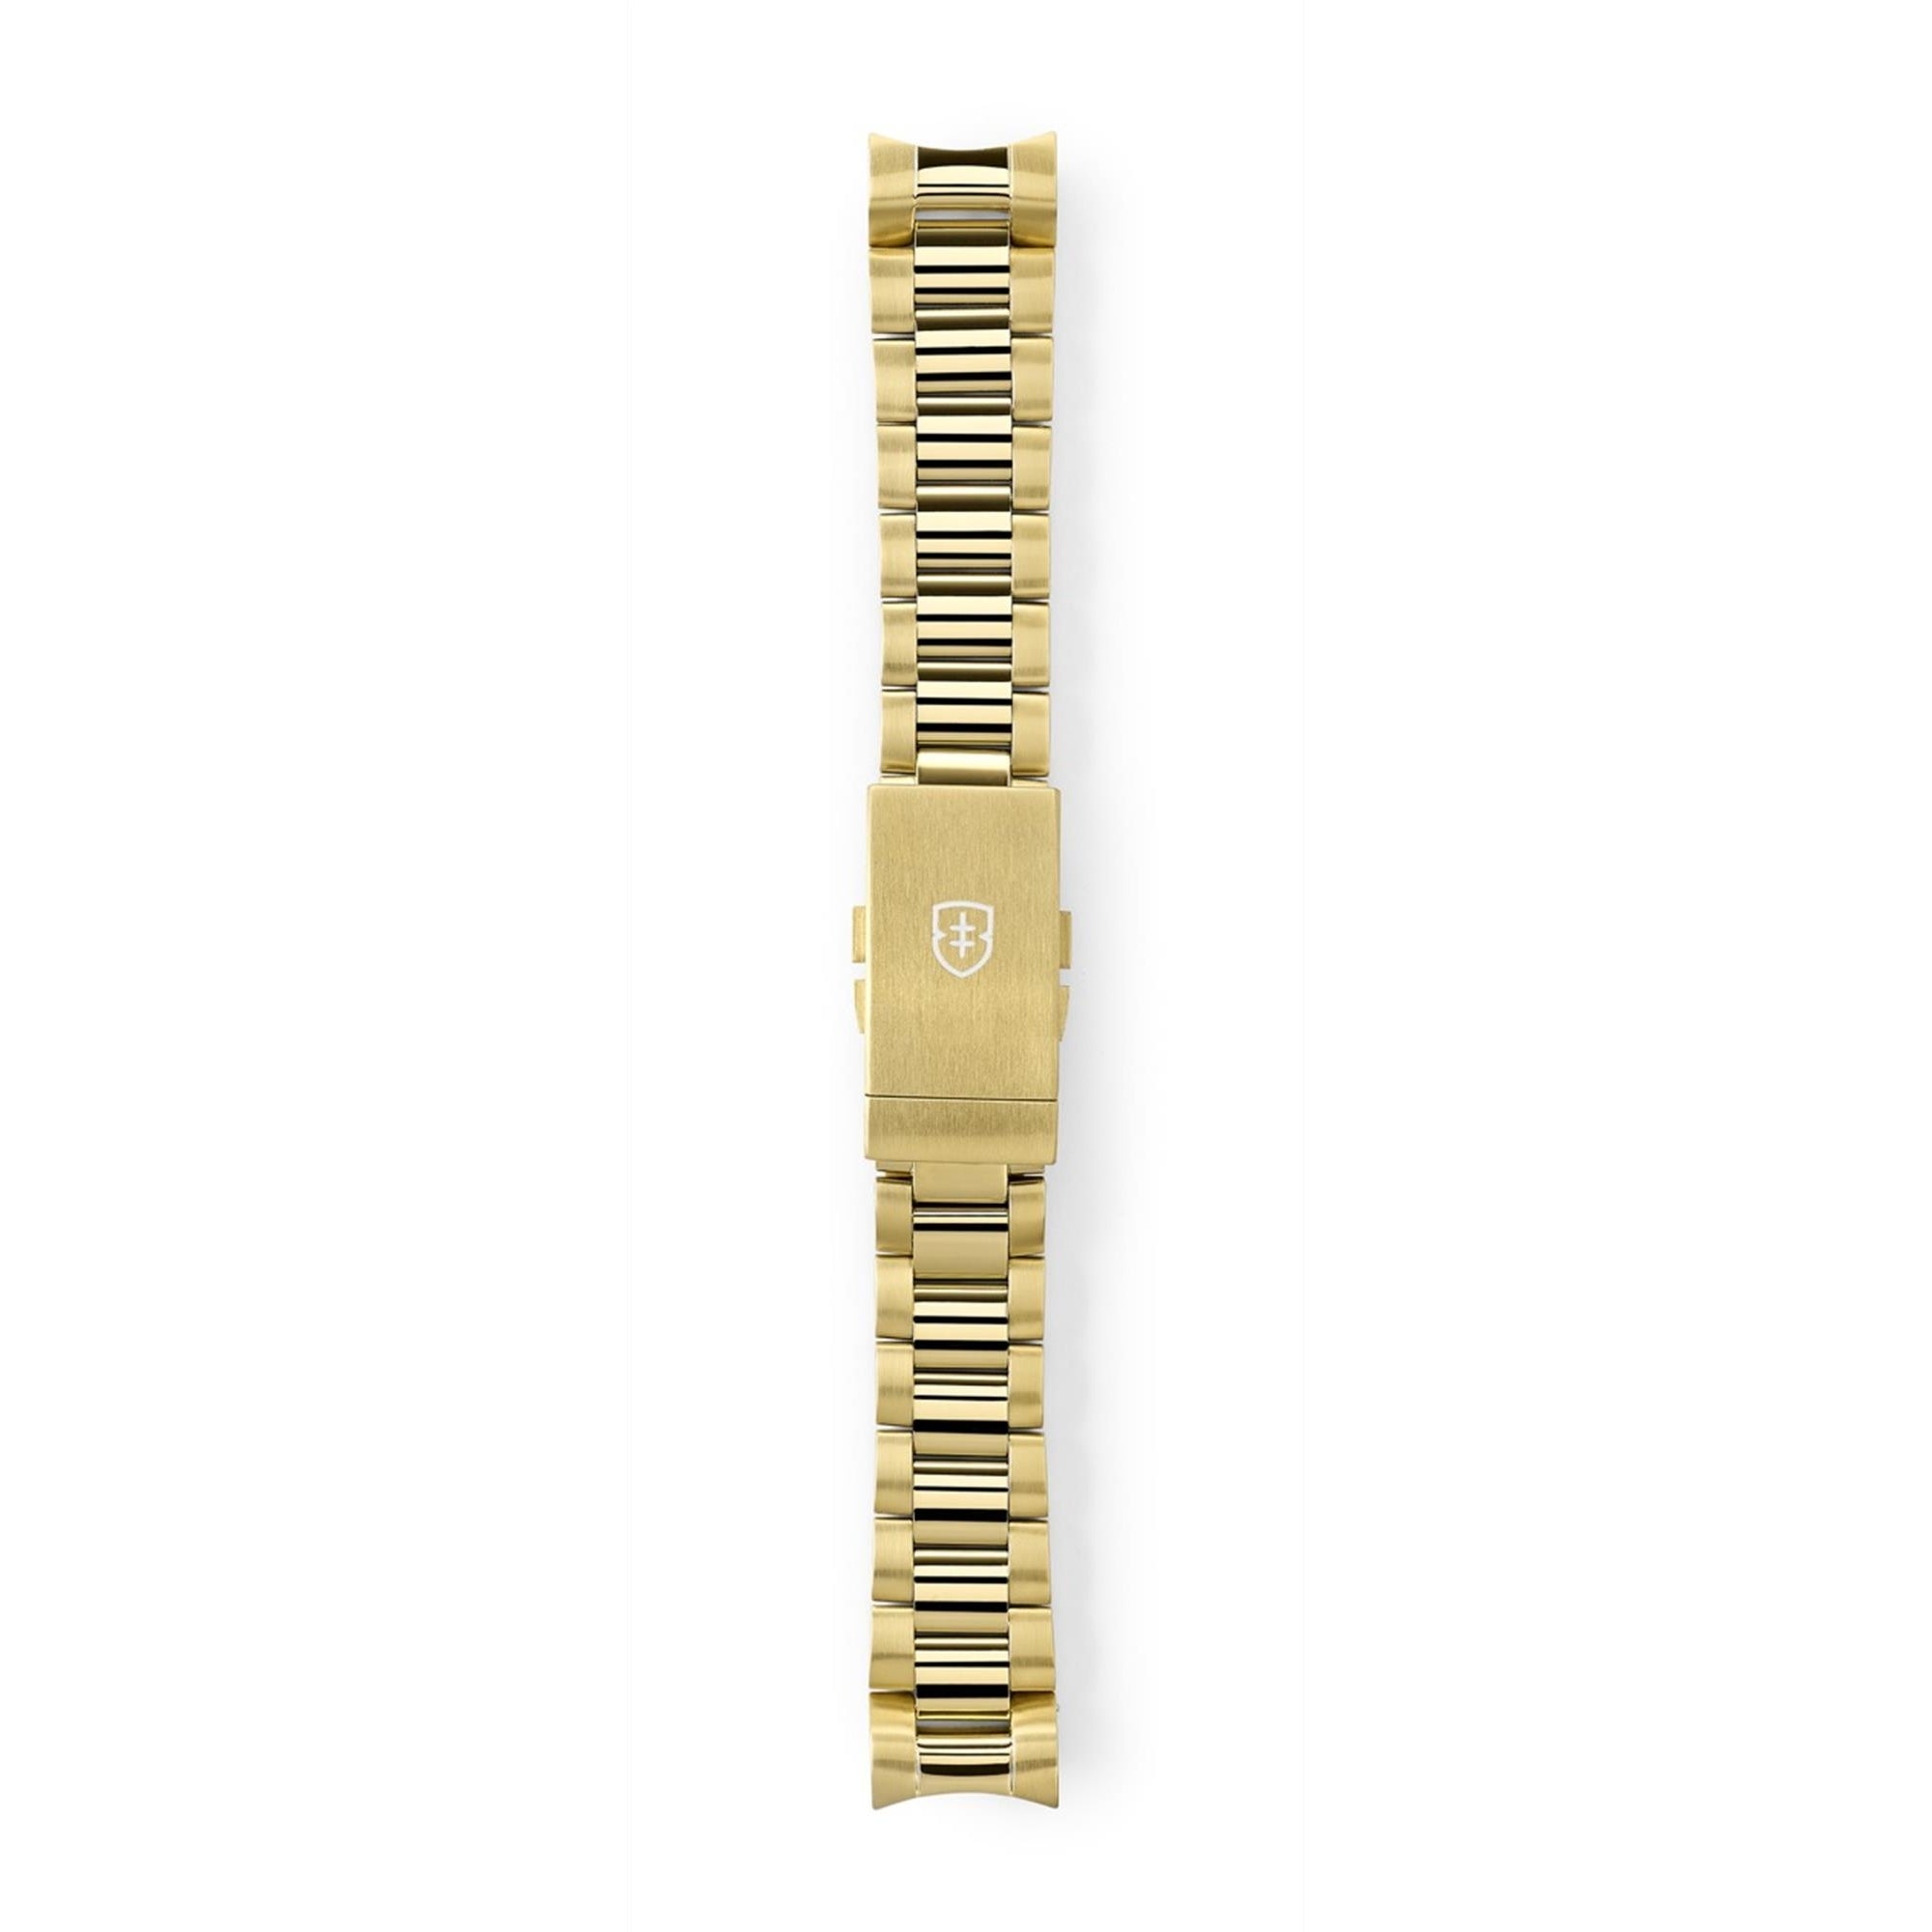 Elliot Brown STL-B53 Kimmeridge Gold Tone Stainless Steel Bracelet product